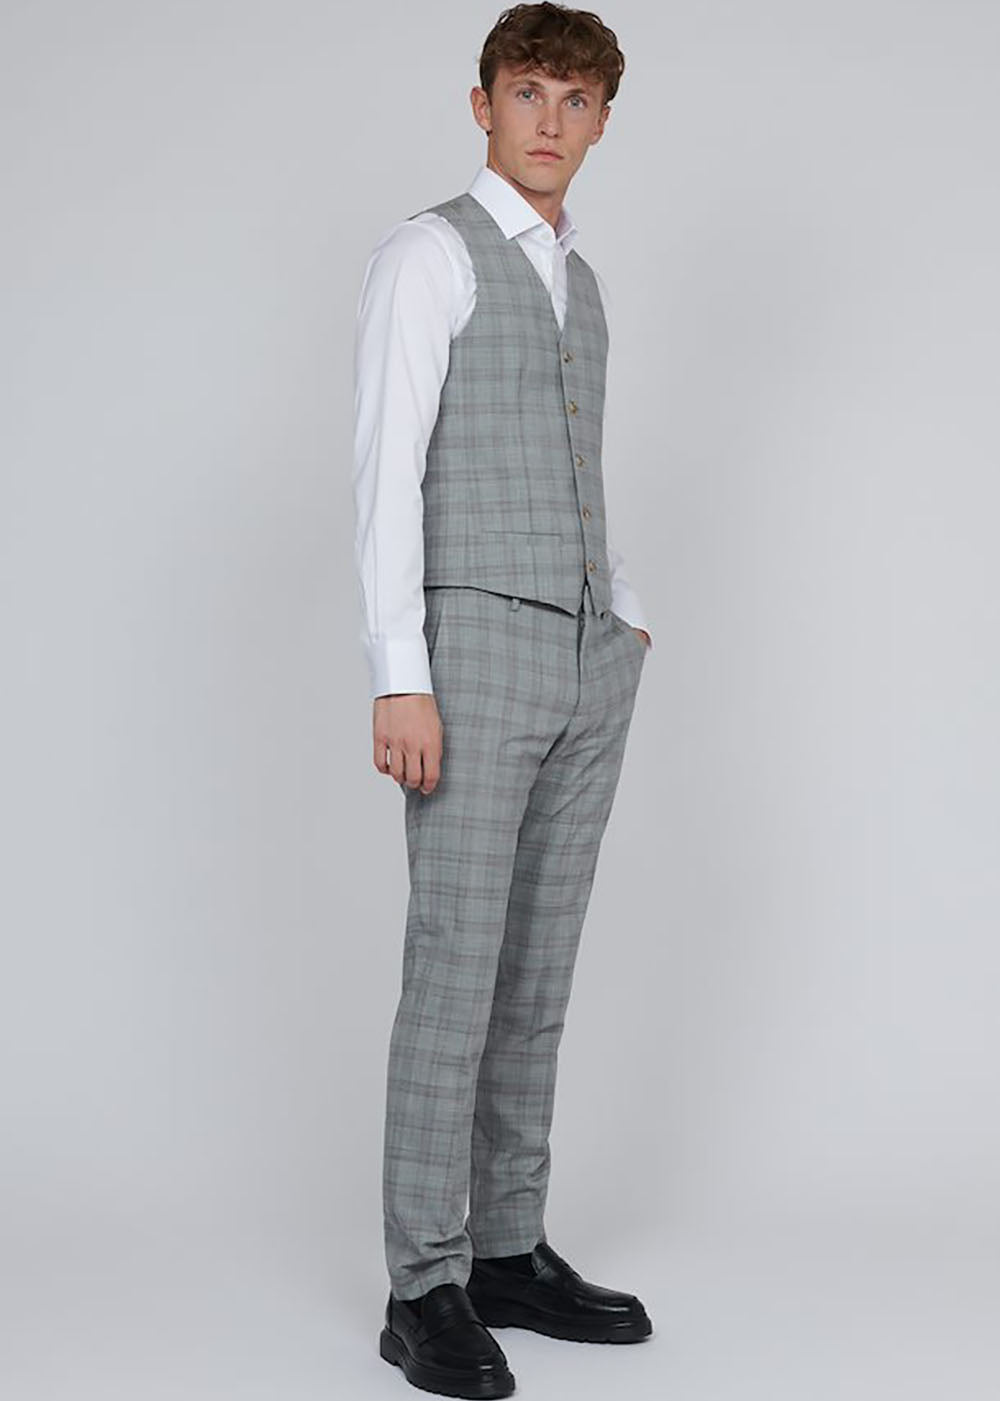 Breck Suit Vest - Ghost Gray Melange - Matinique Canada - Danali - 30207214